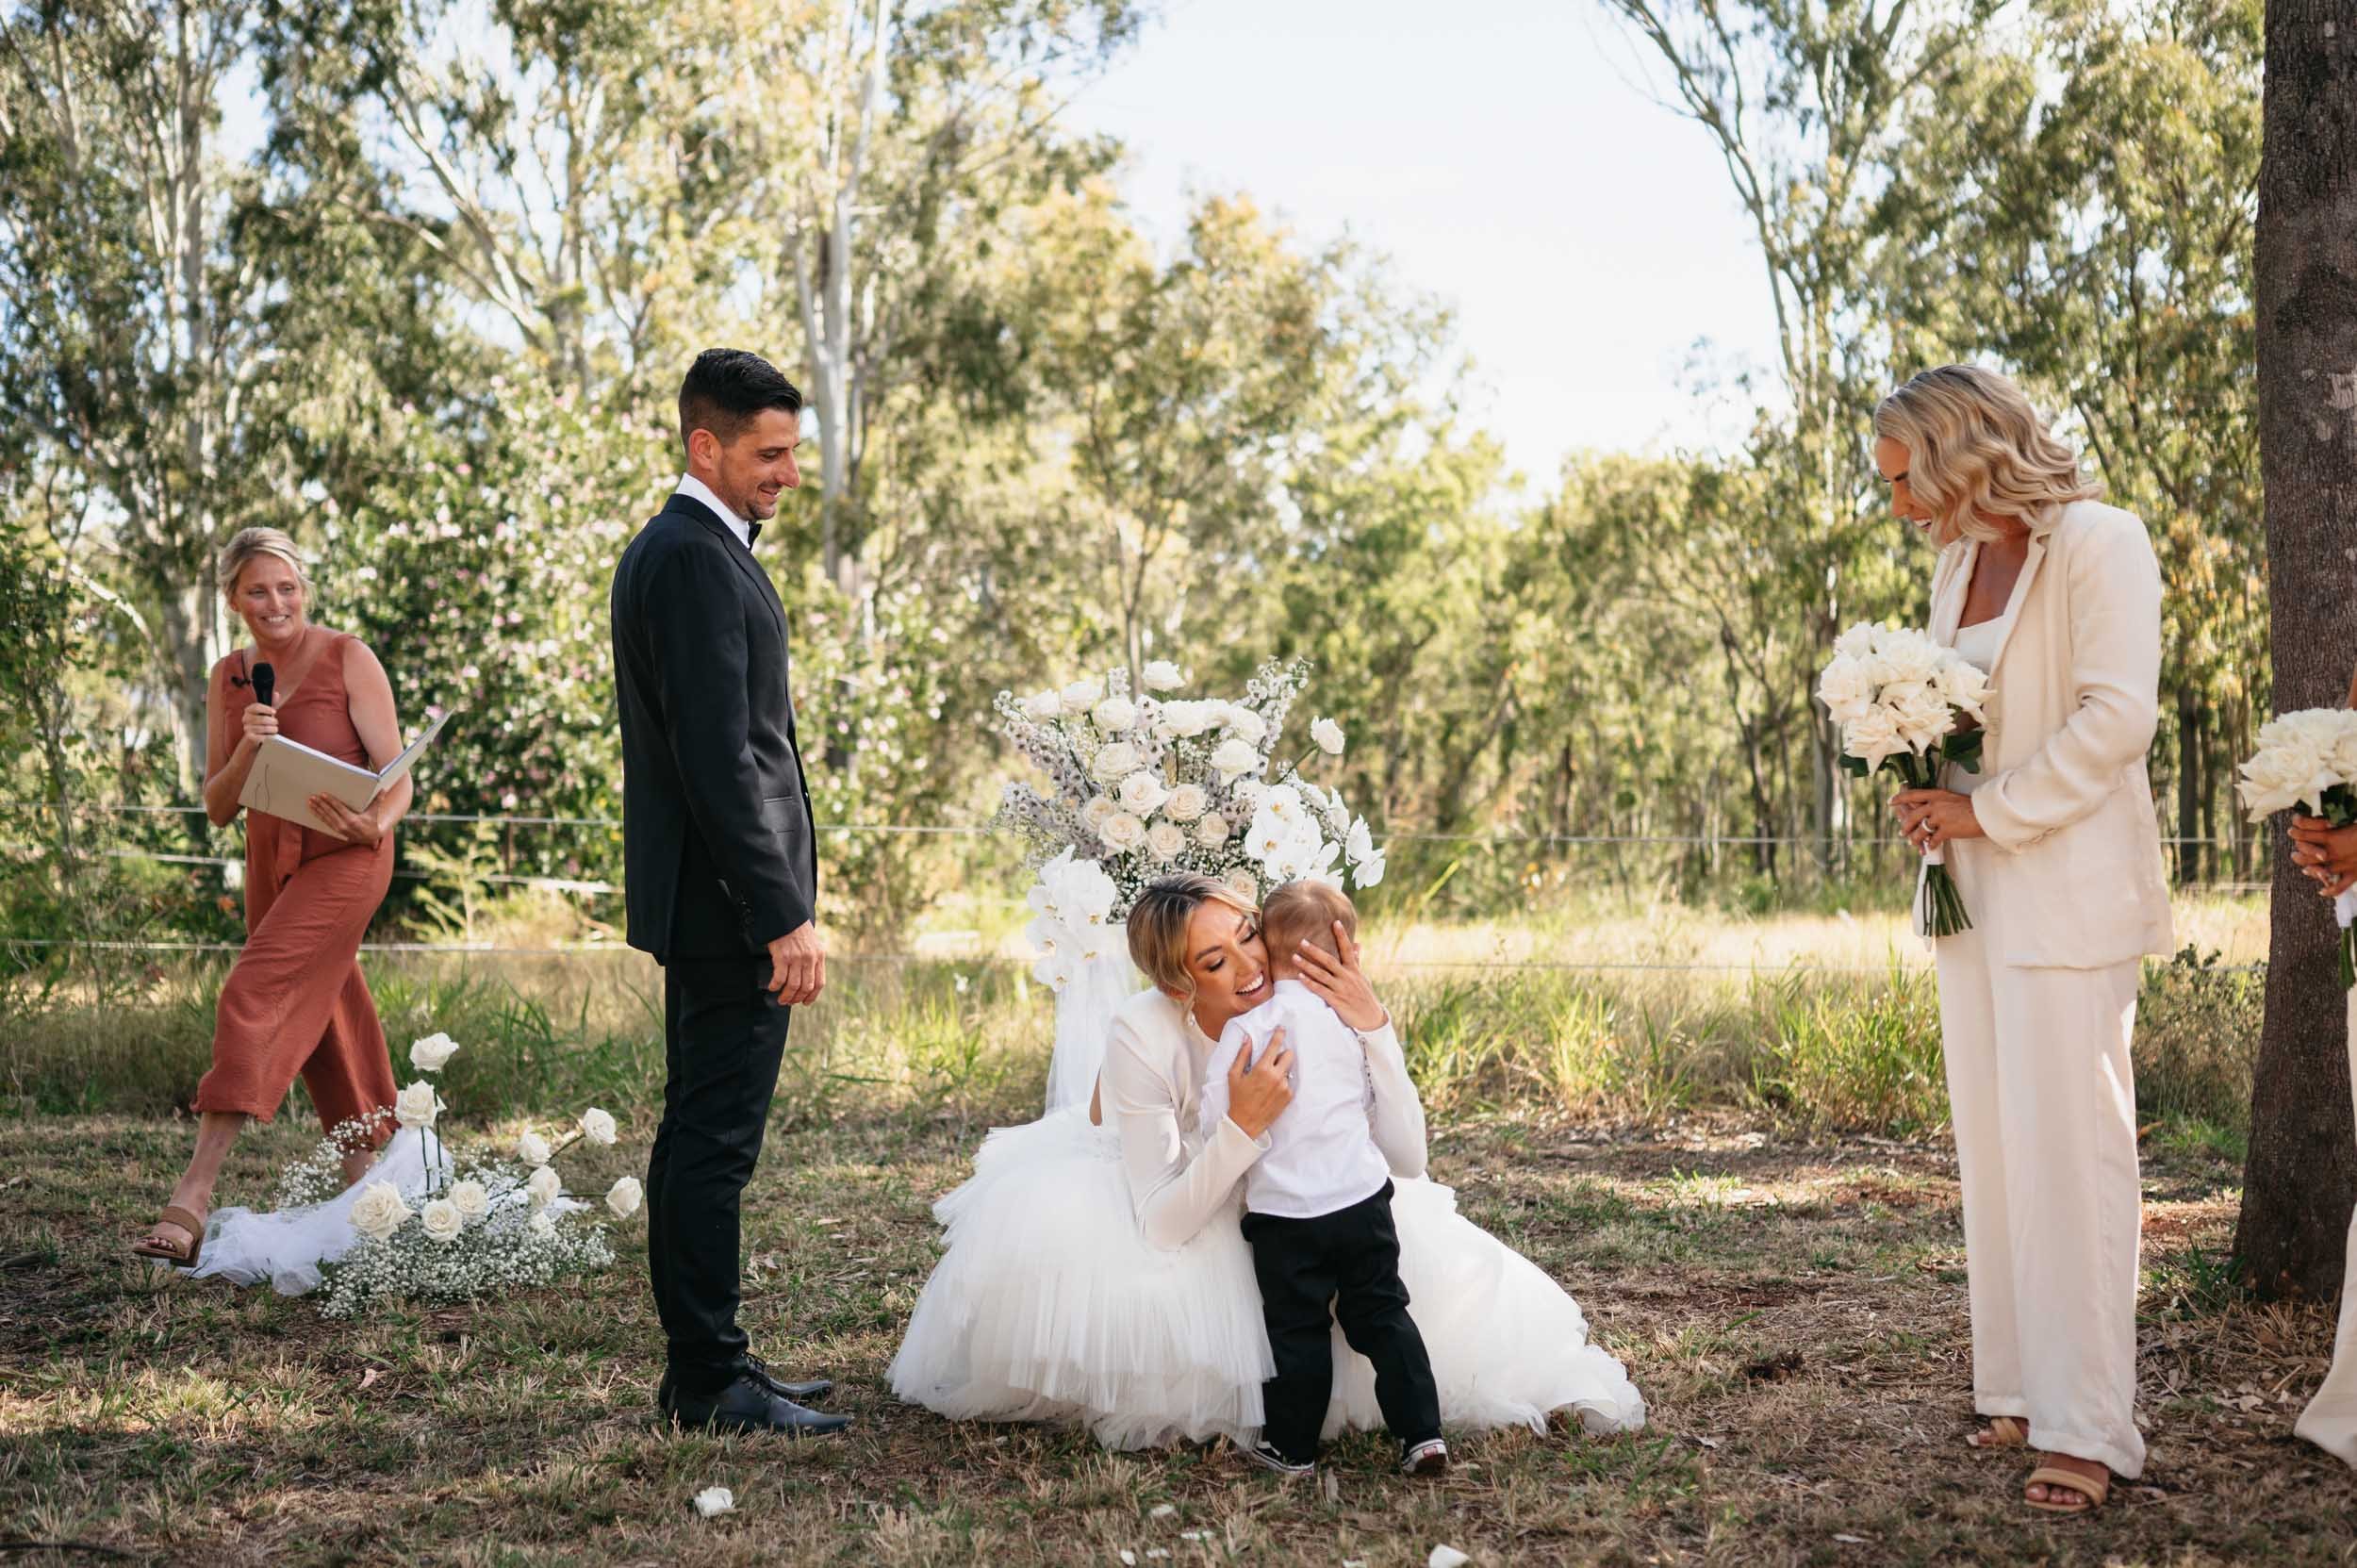 The Raw Photographer - Cairns Wedding Photographer - Mareeba Tablelands - Queensland photography - Kyha dress - luxury-25.jpg